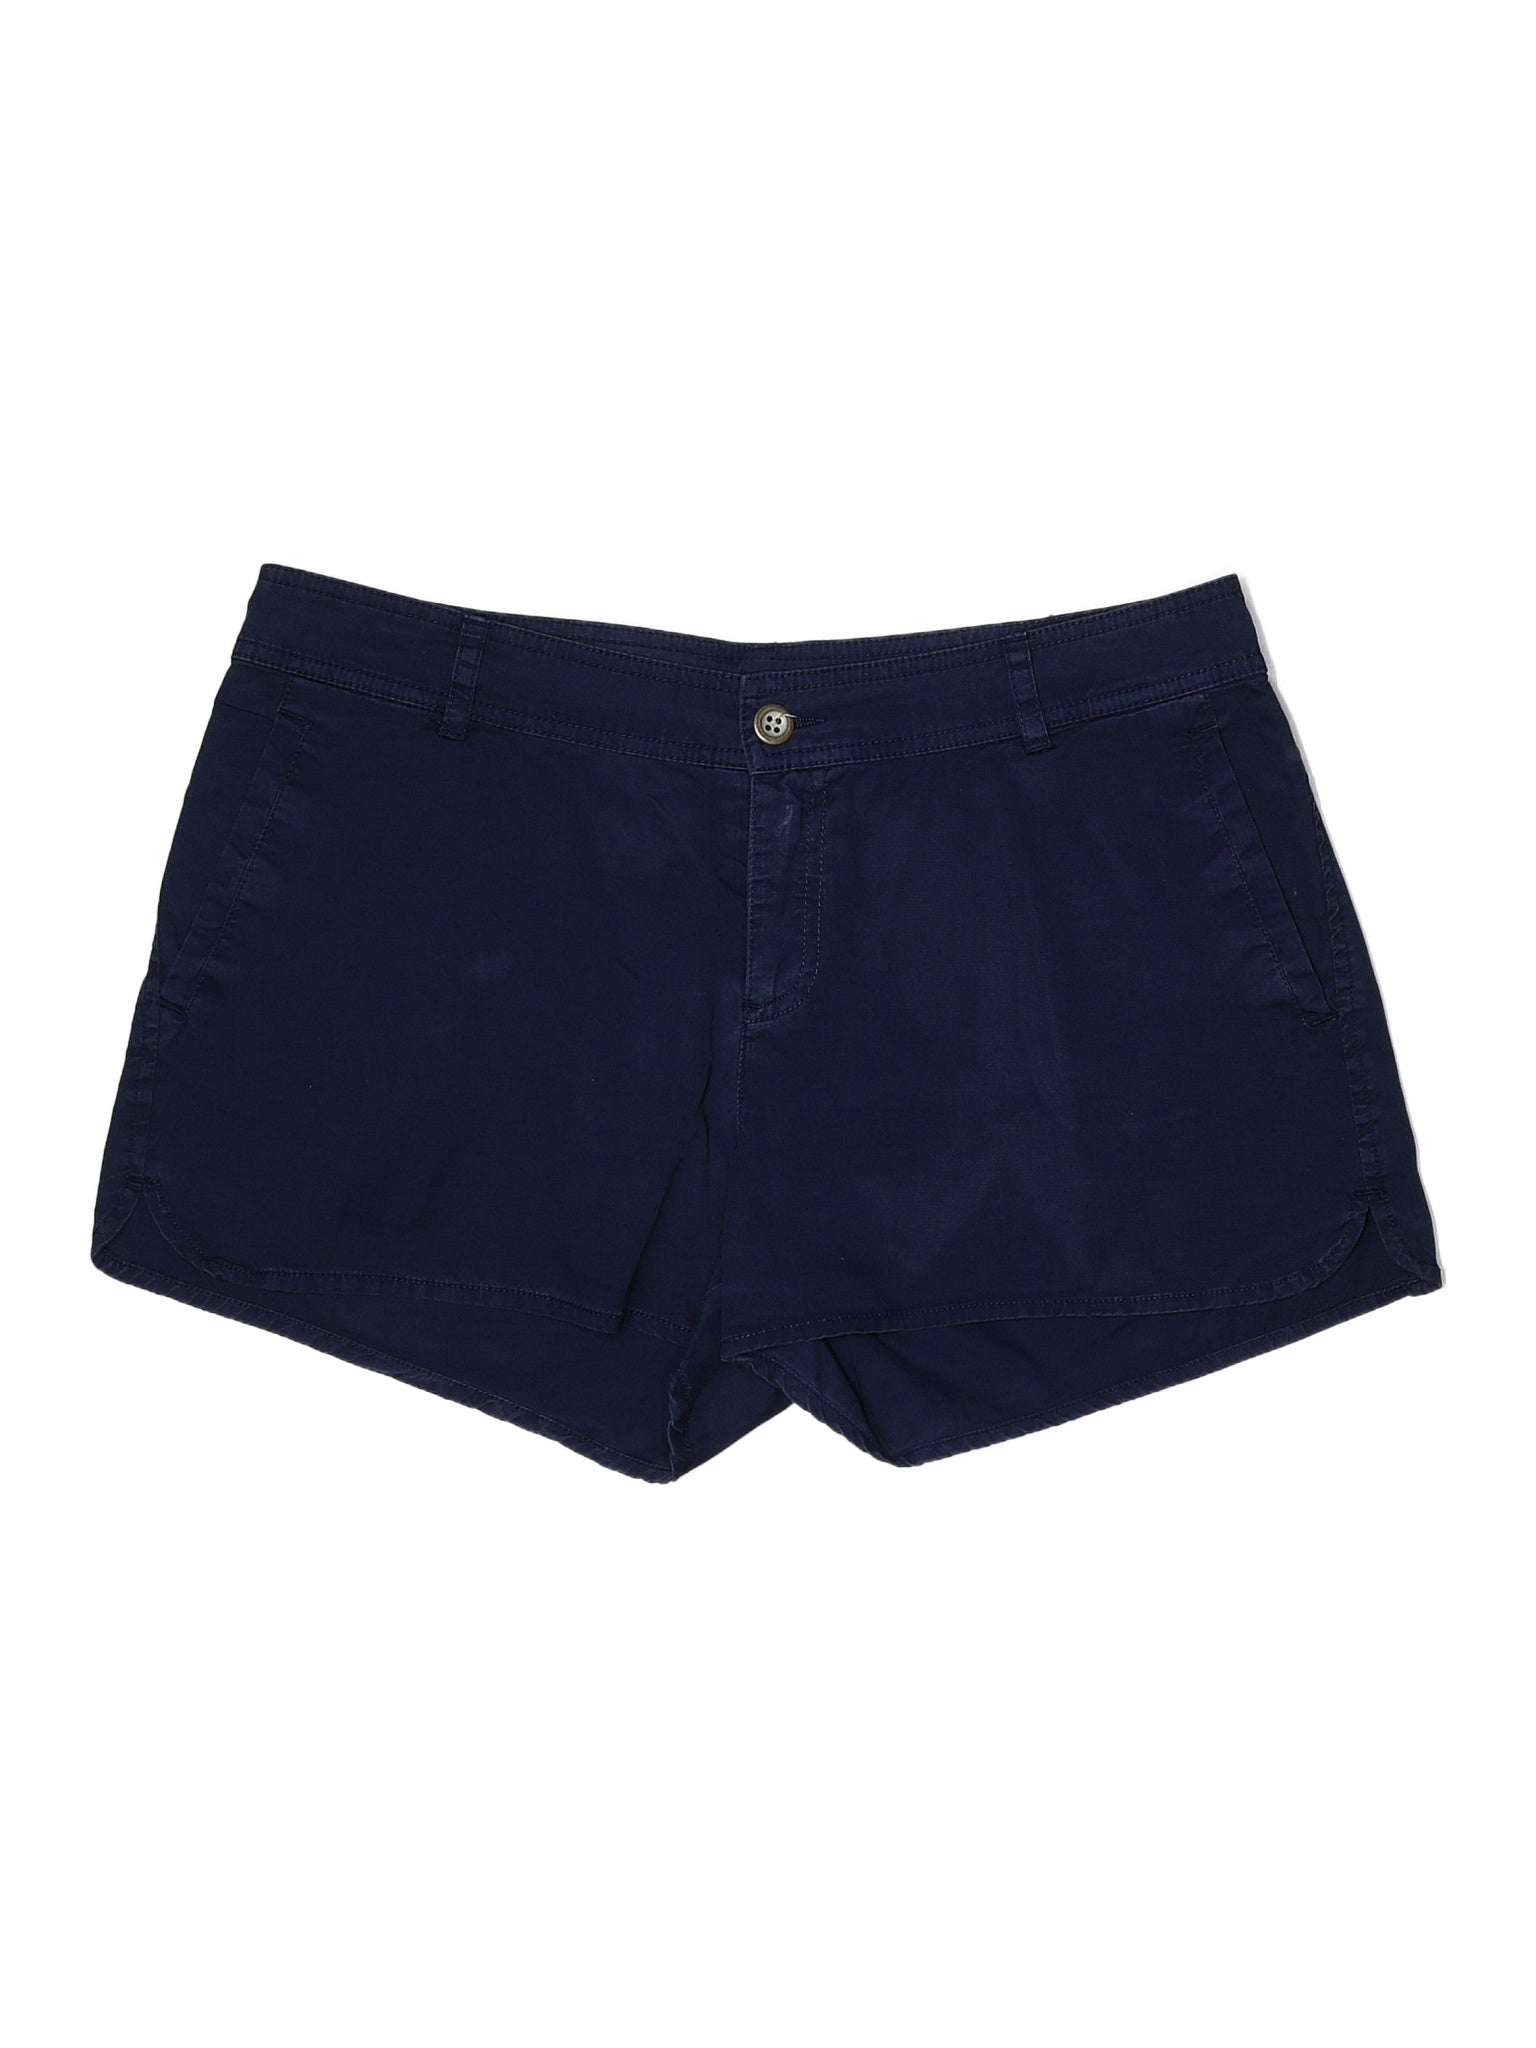 Khaki Shorts size - M